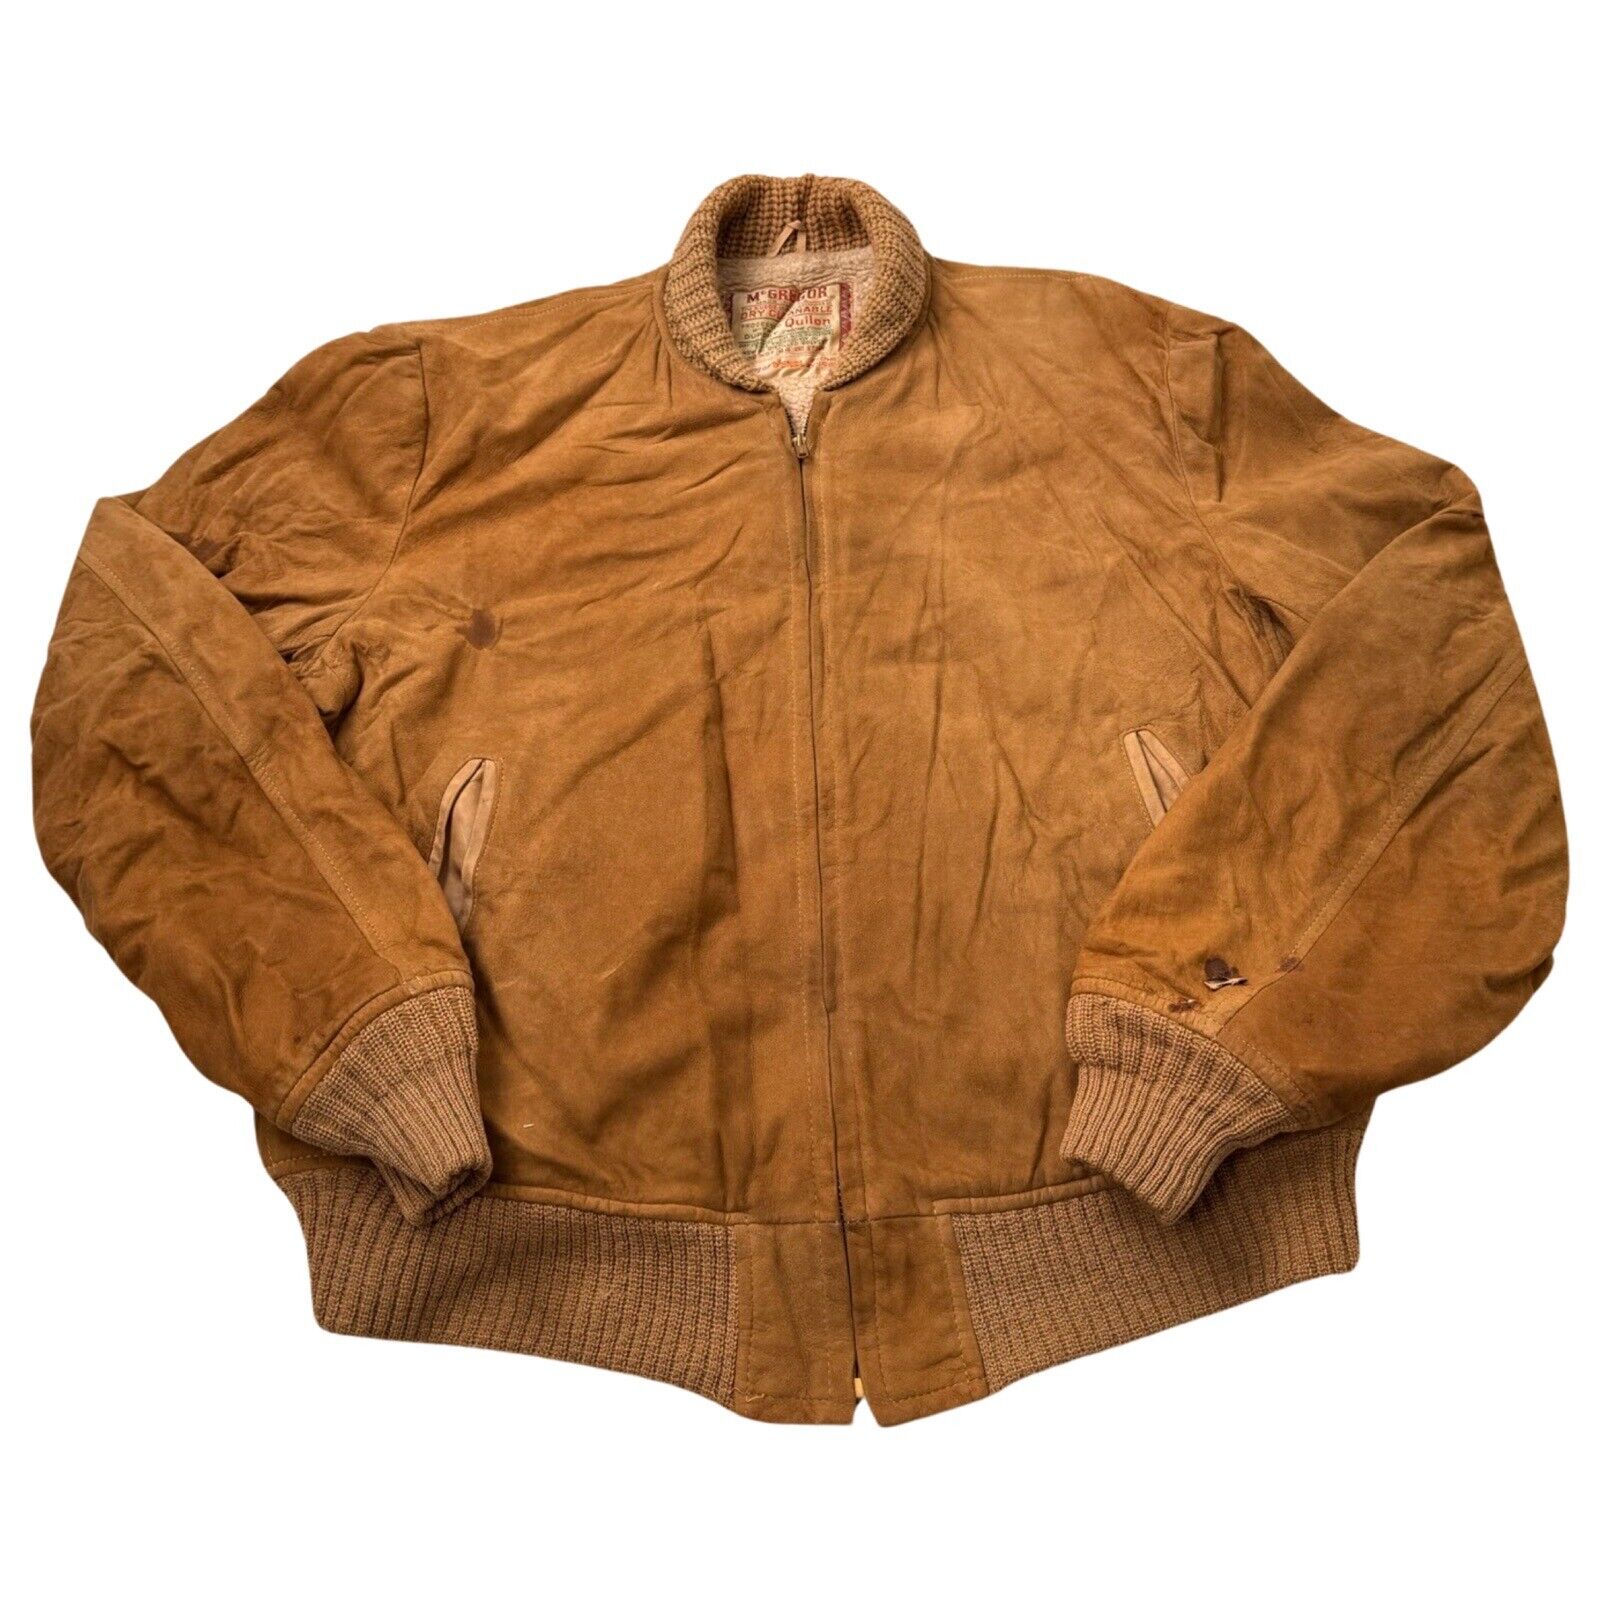 Vtg 50s McGregor Bomber Jacket Size 44 Tan Suede Leather (see Pics)